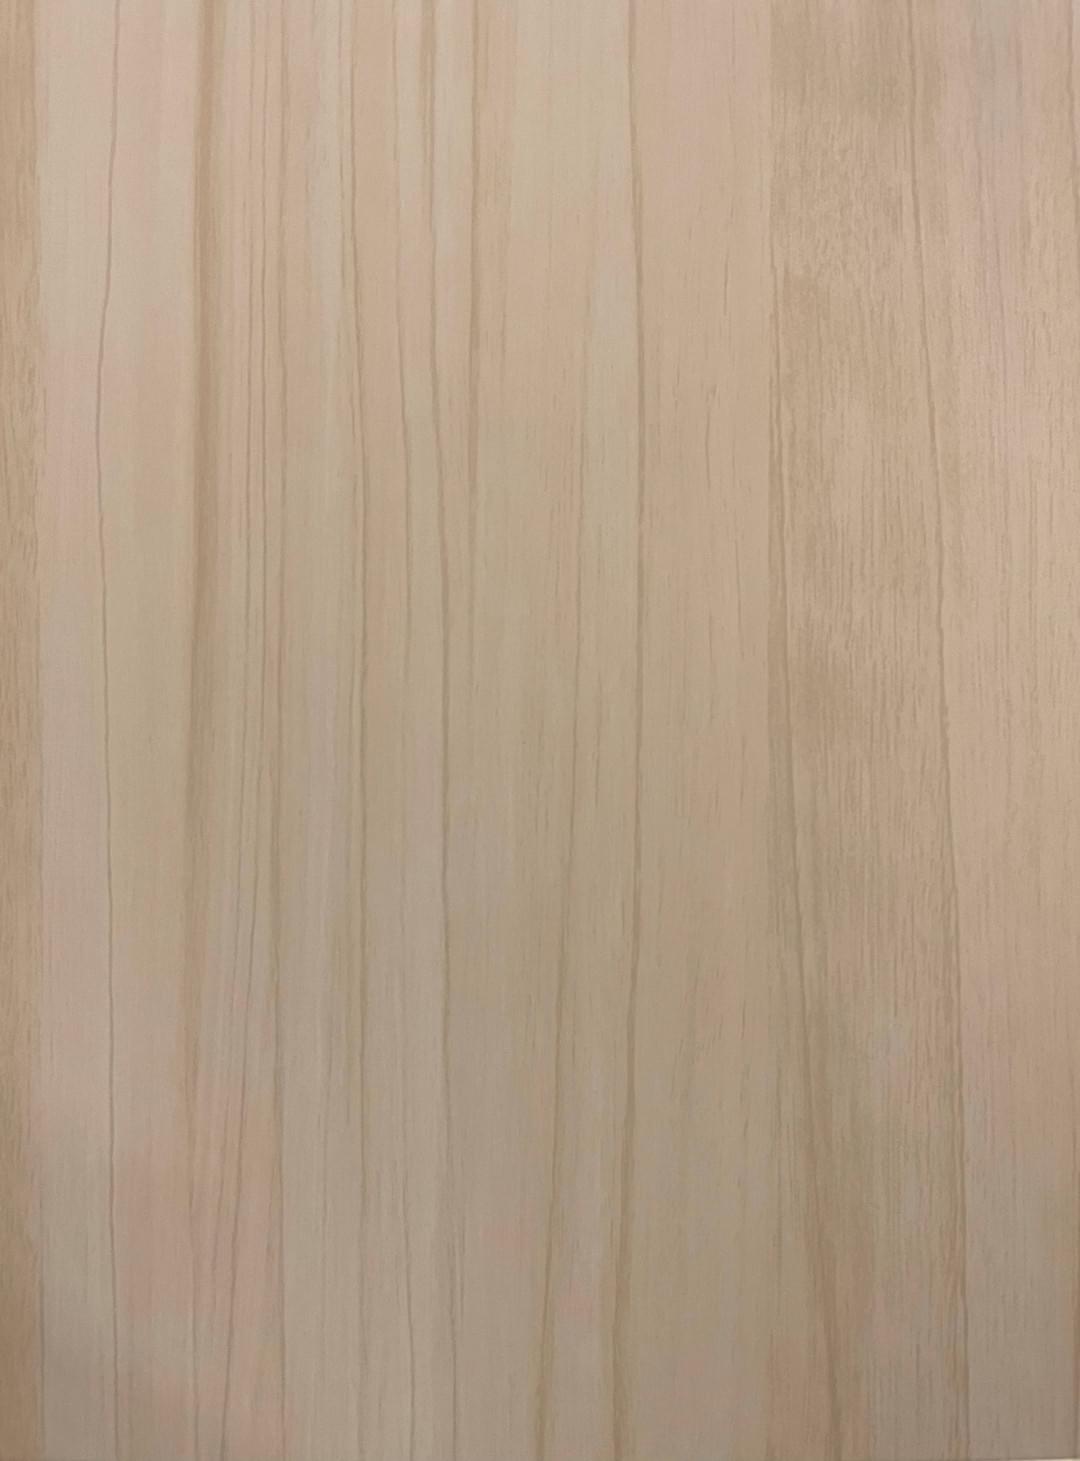 Woodgrain (Dao wood) from DNP Singapore